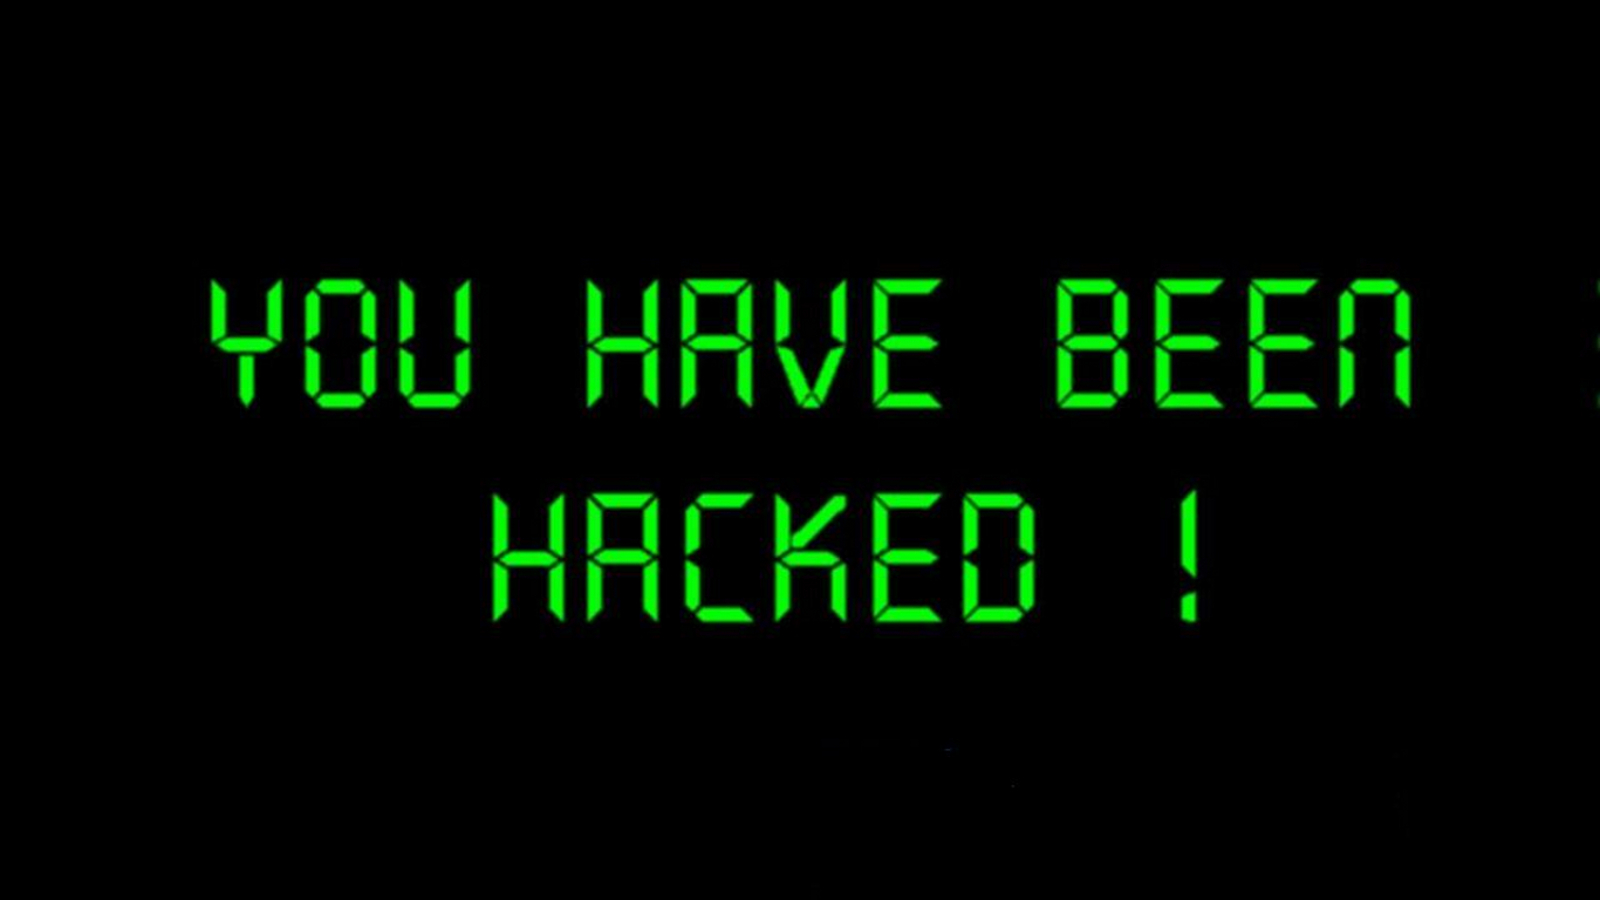 Wallpapers Hacker Facebook Hacking Hacke 1600x900 #hacker